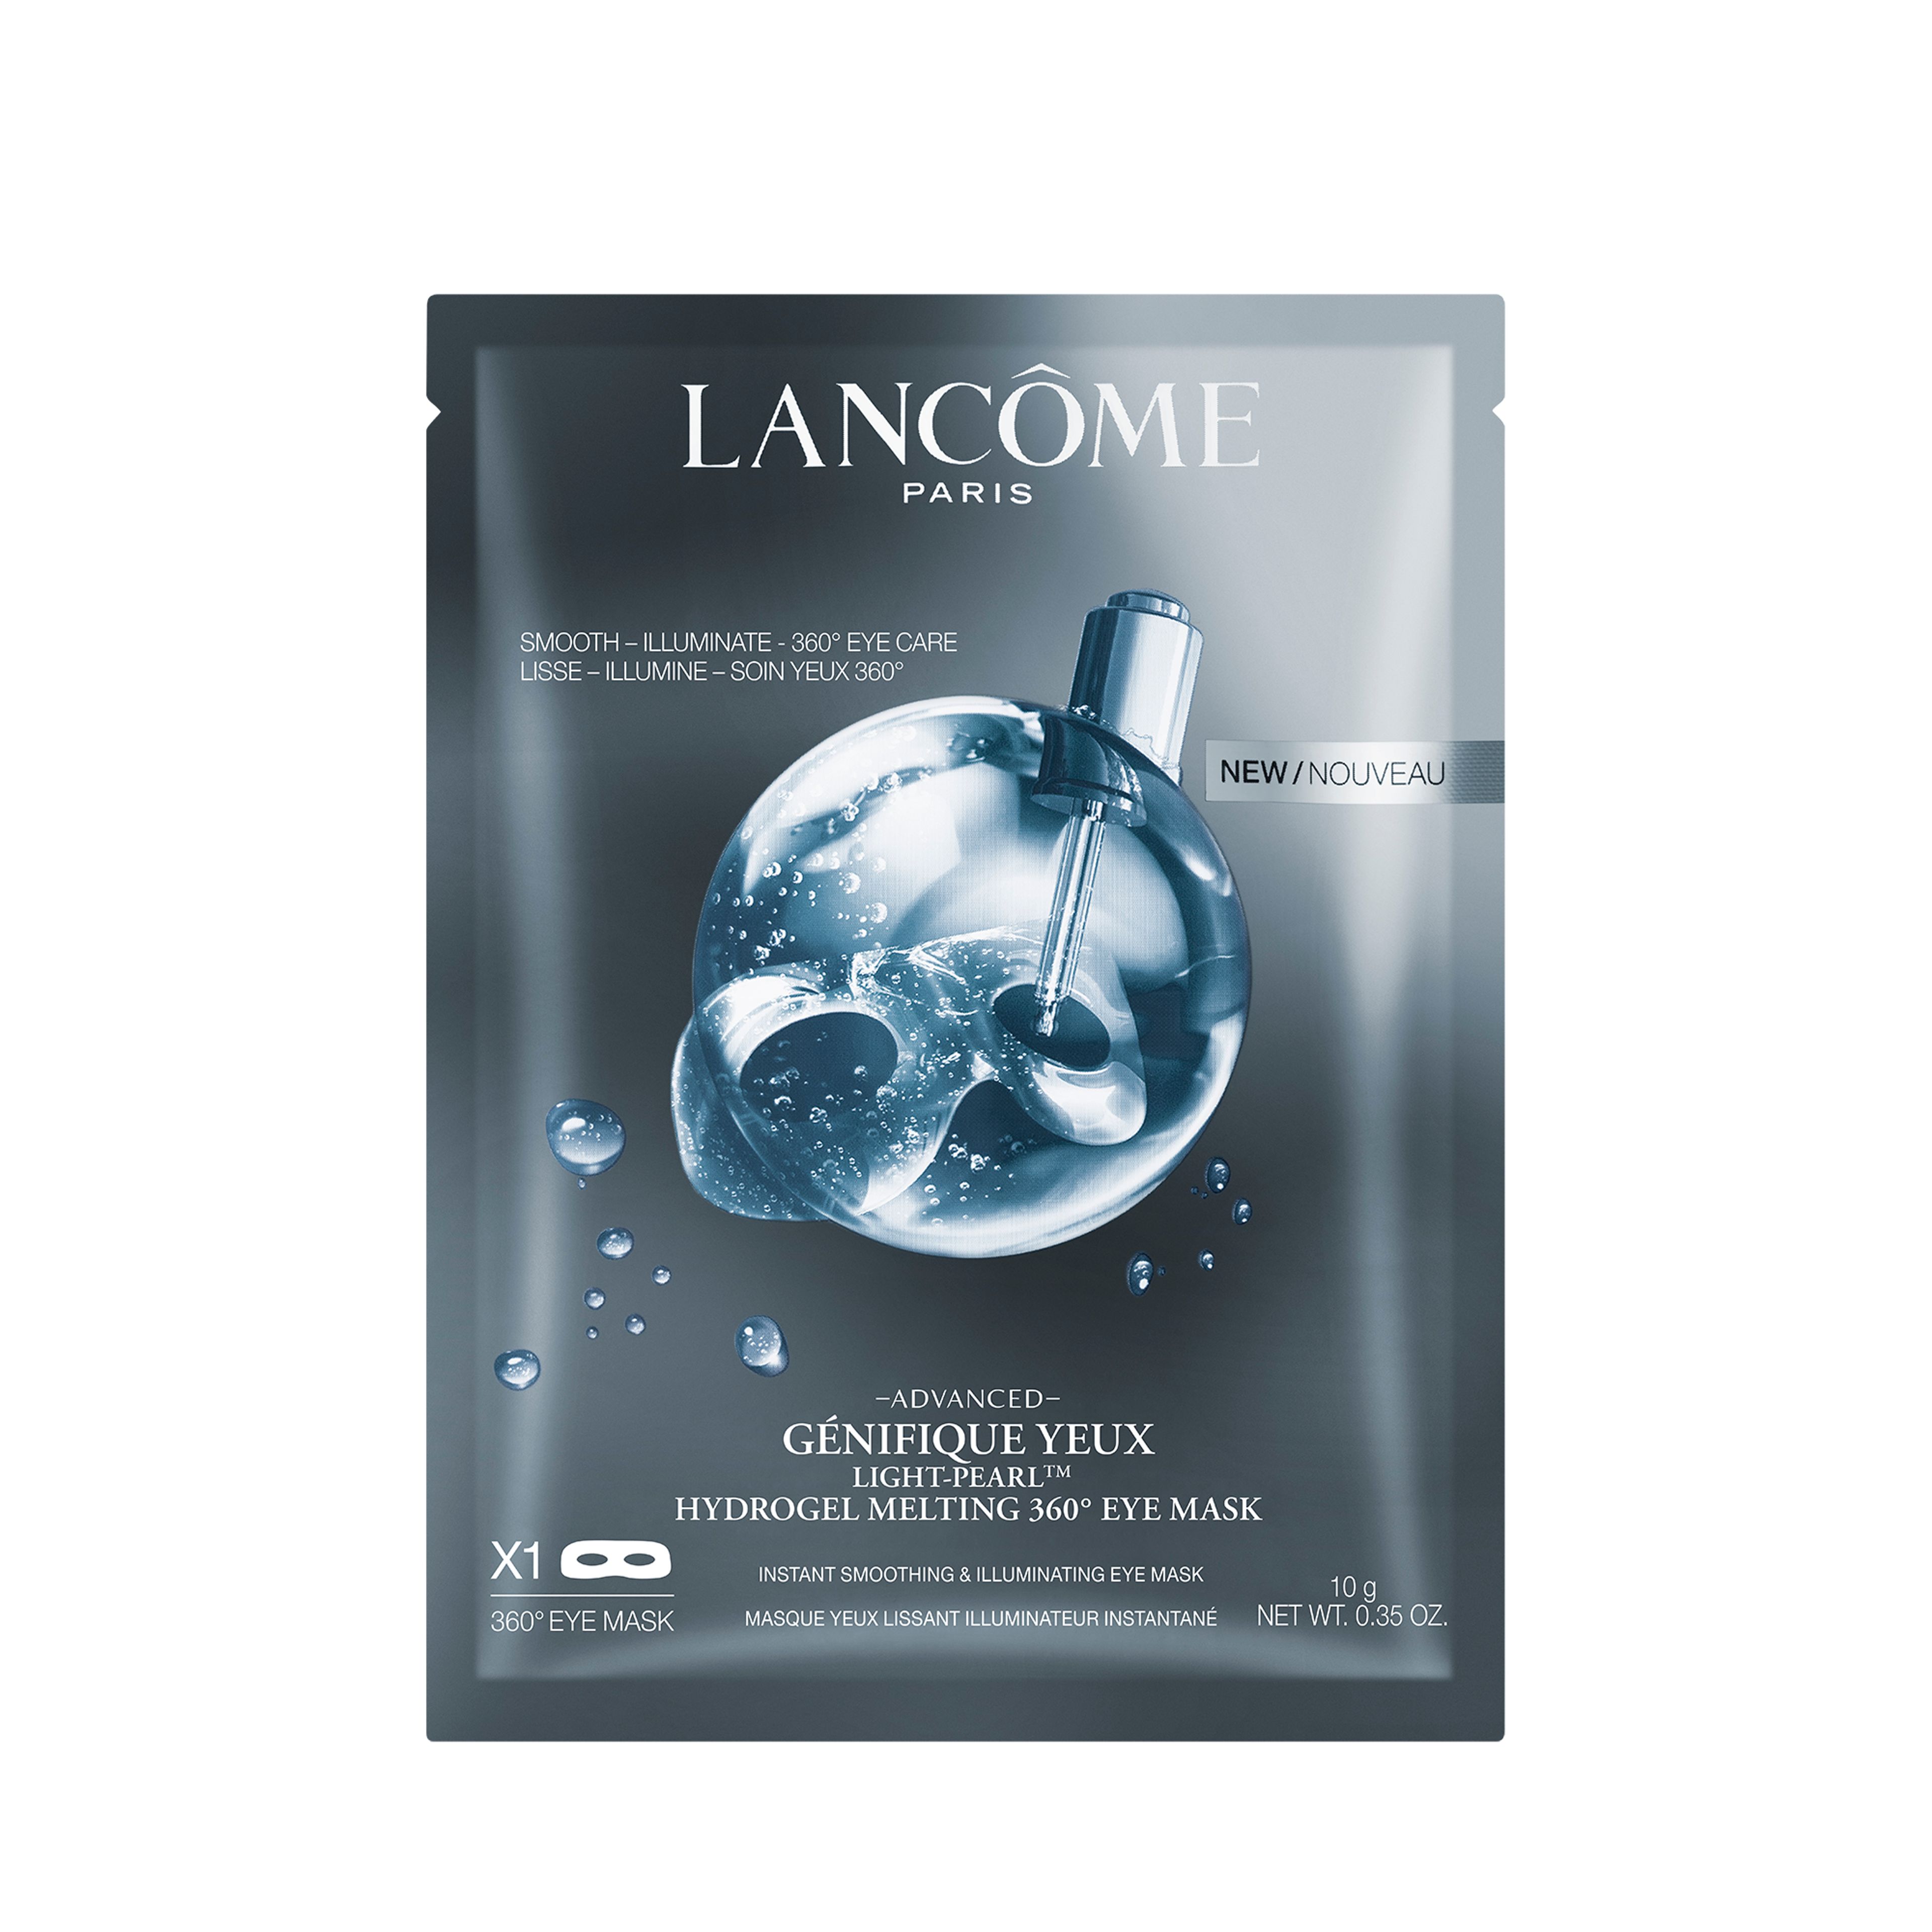 Lancôme Advanced Génifique Light Pearl Hydrogel Melting 360 Eye Mask 1